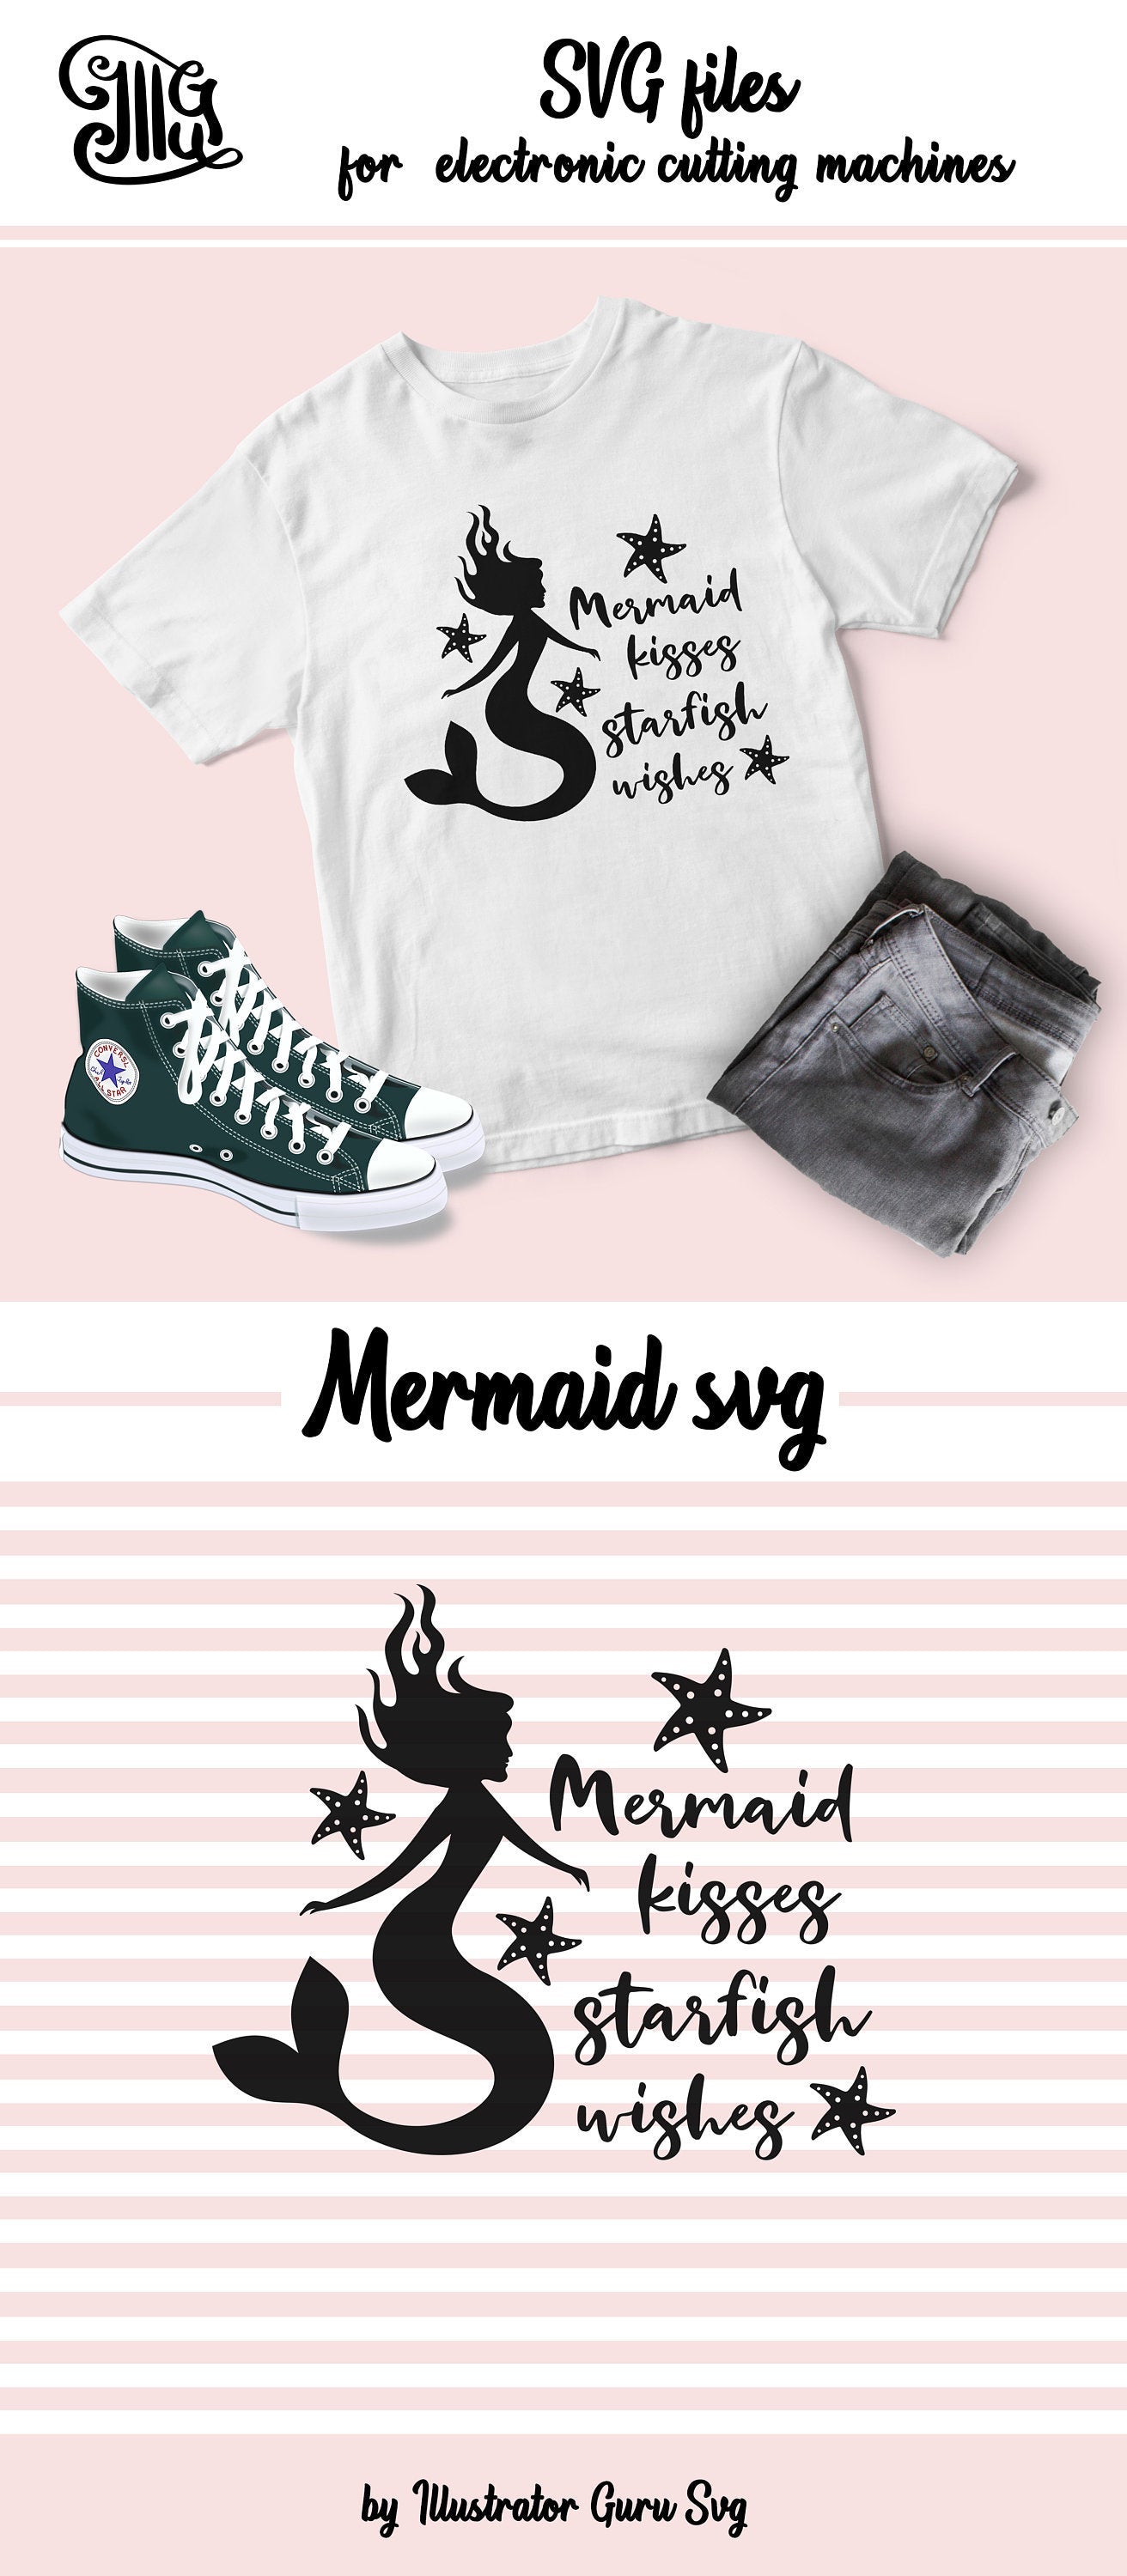 Download Mermaid Kisses Starfish Wishes Svg Mermaid Svg Beach Svg Summer Svg Illustrator Guru